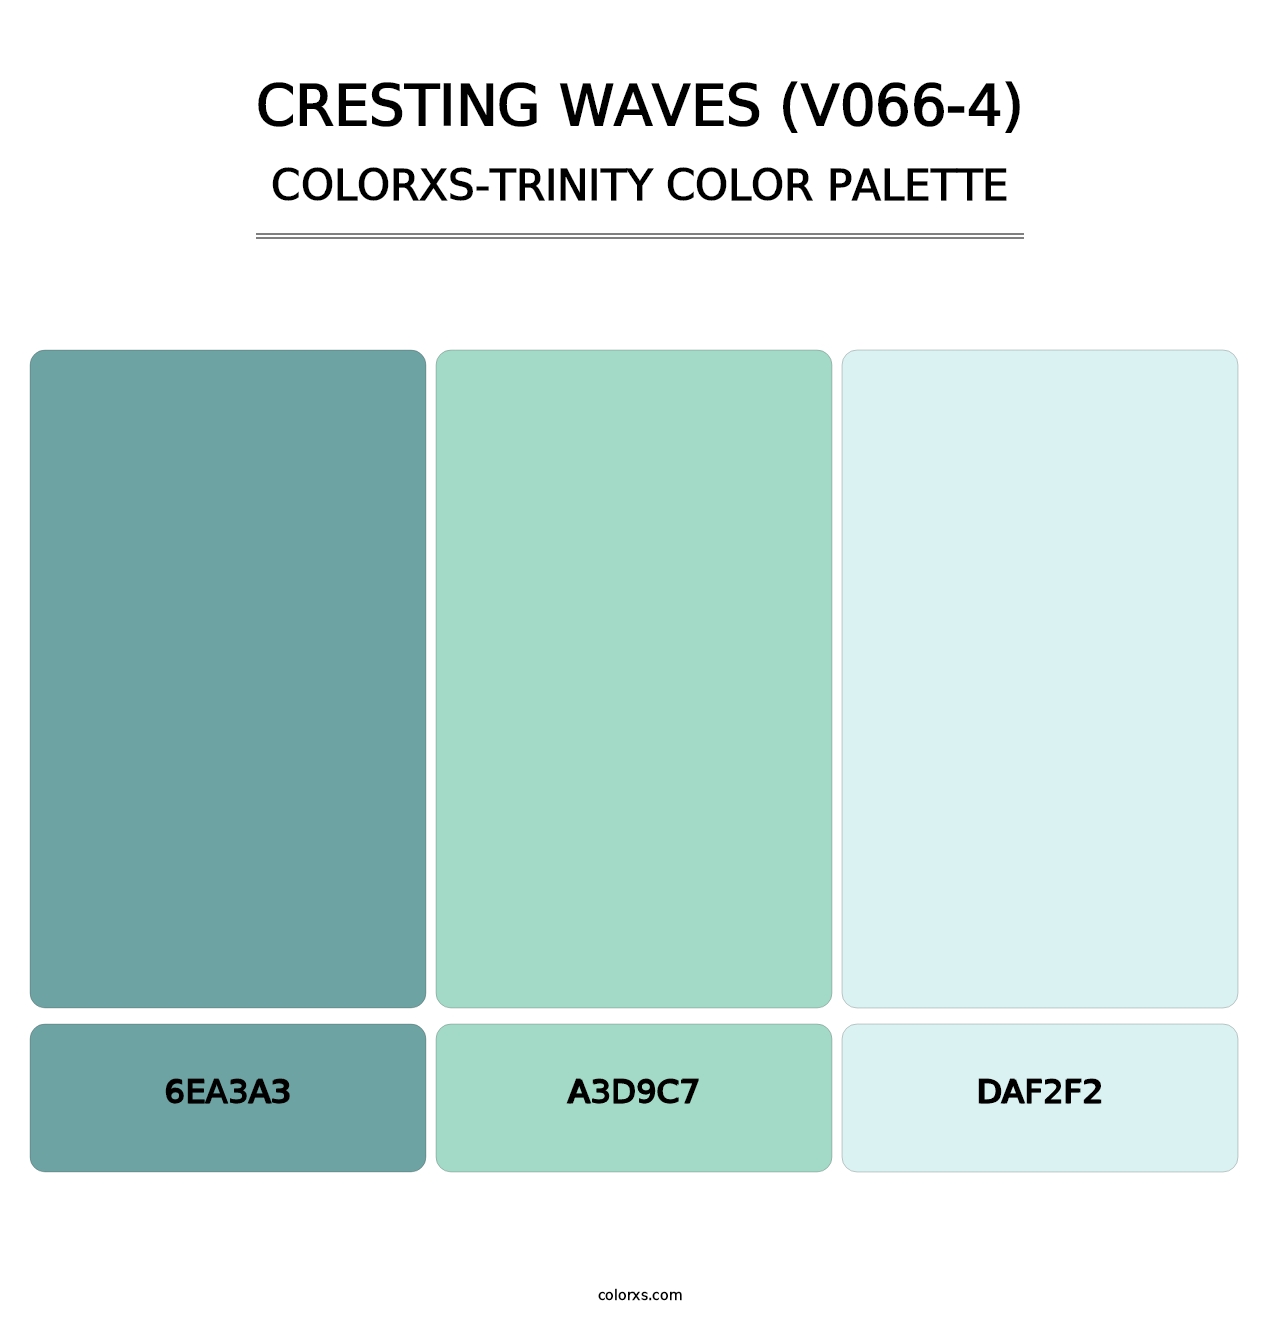 Cresting Waves (V066-4) - Colorxs Trinity Palette